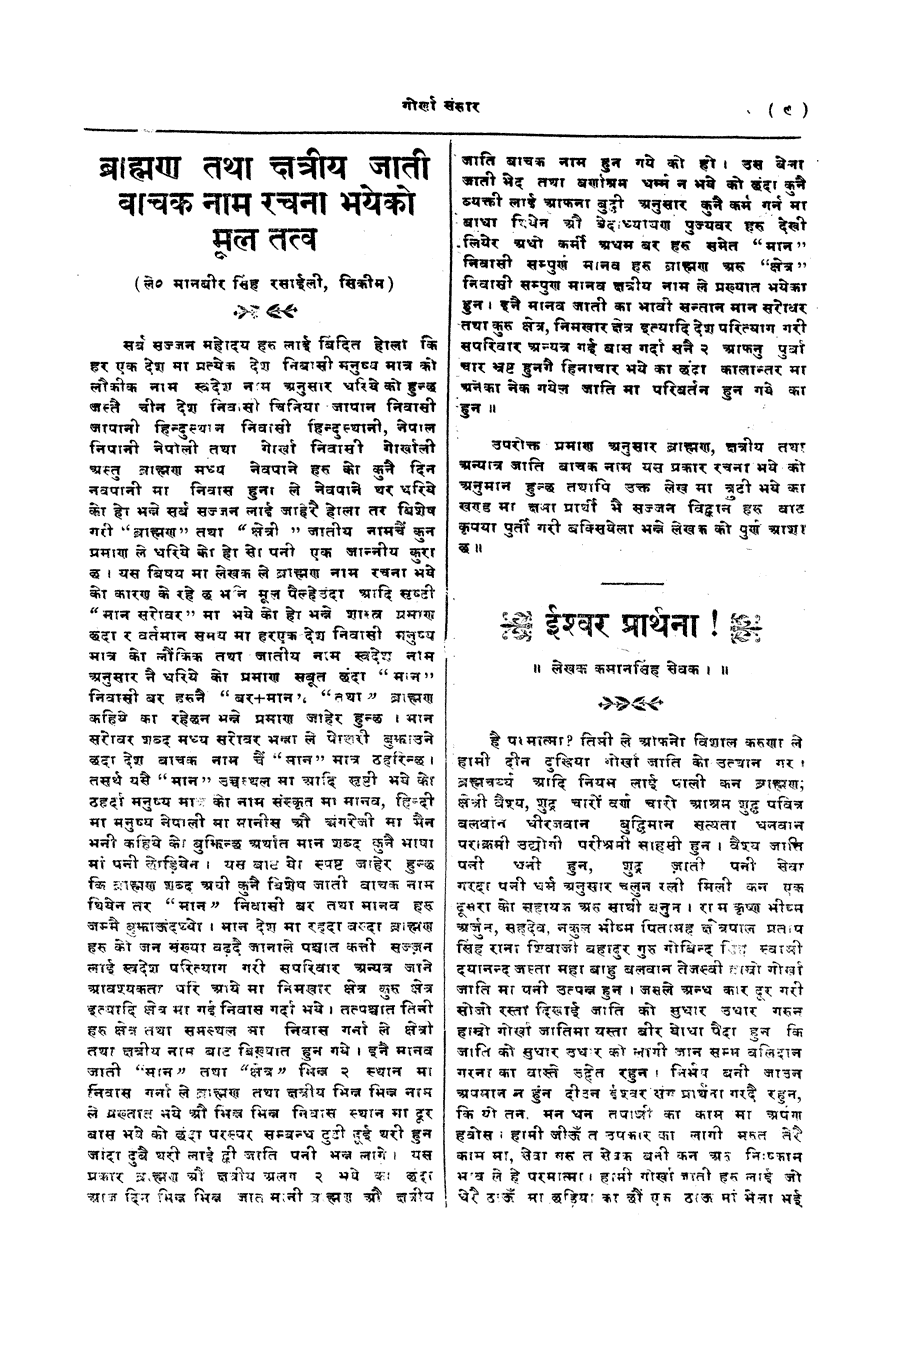 Gorkha Sansar, 15 June 1928, page 9